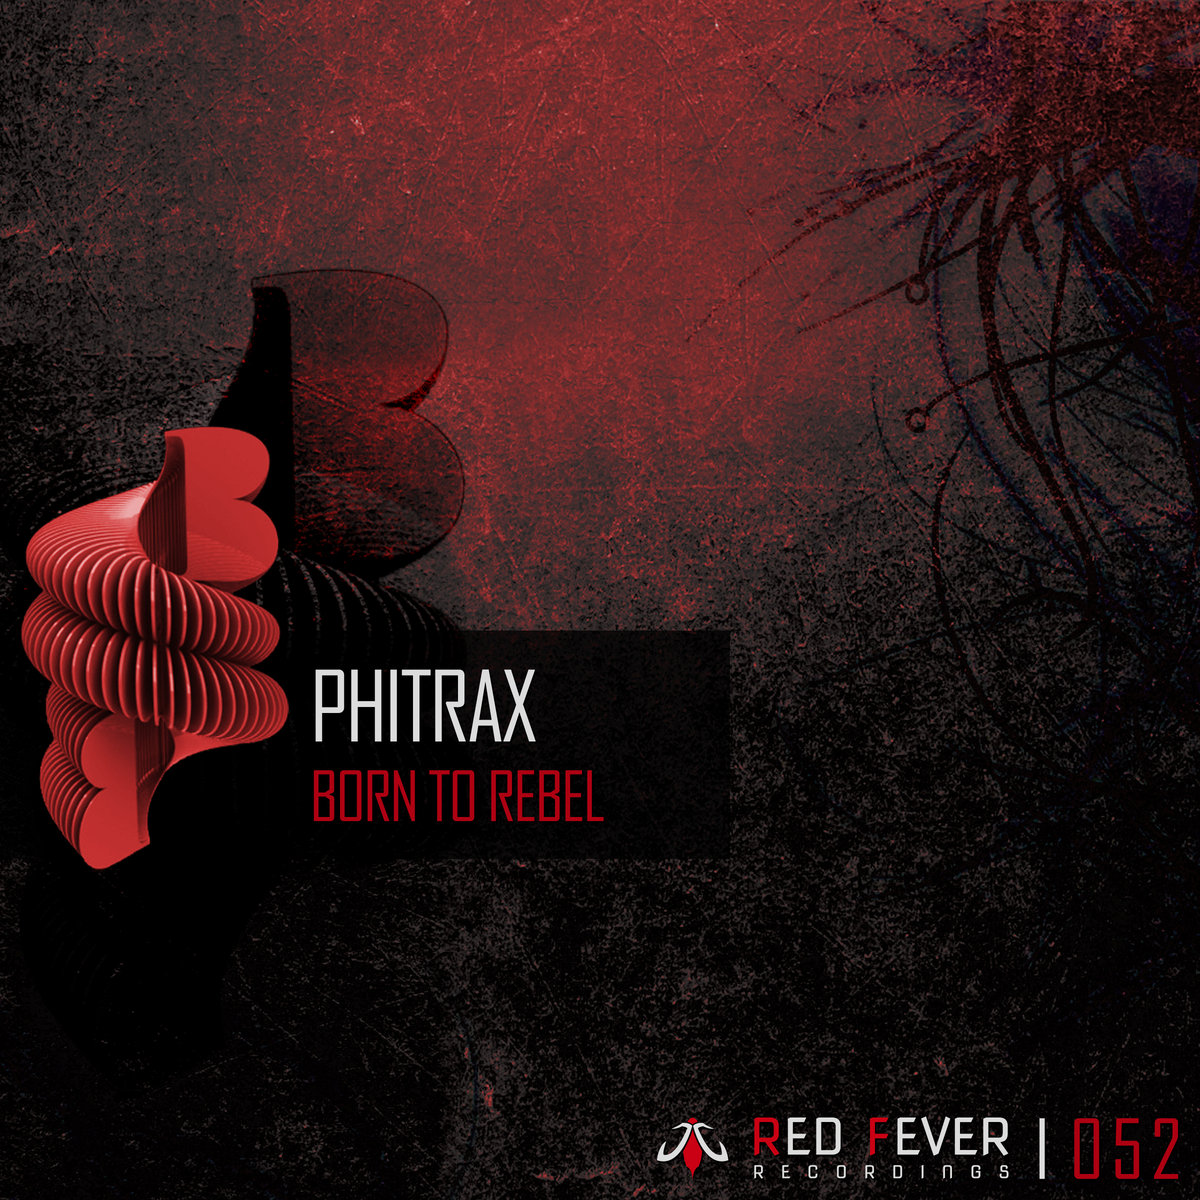 Phitrax - Born to rebel